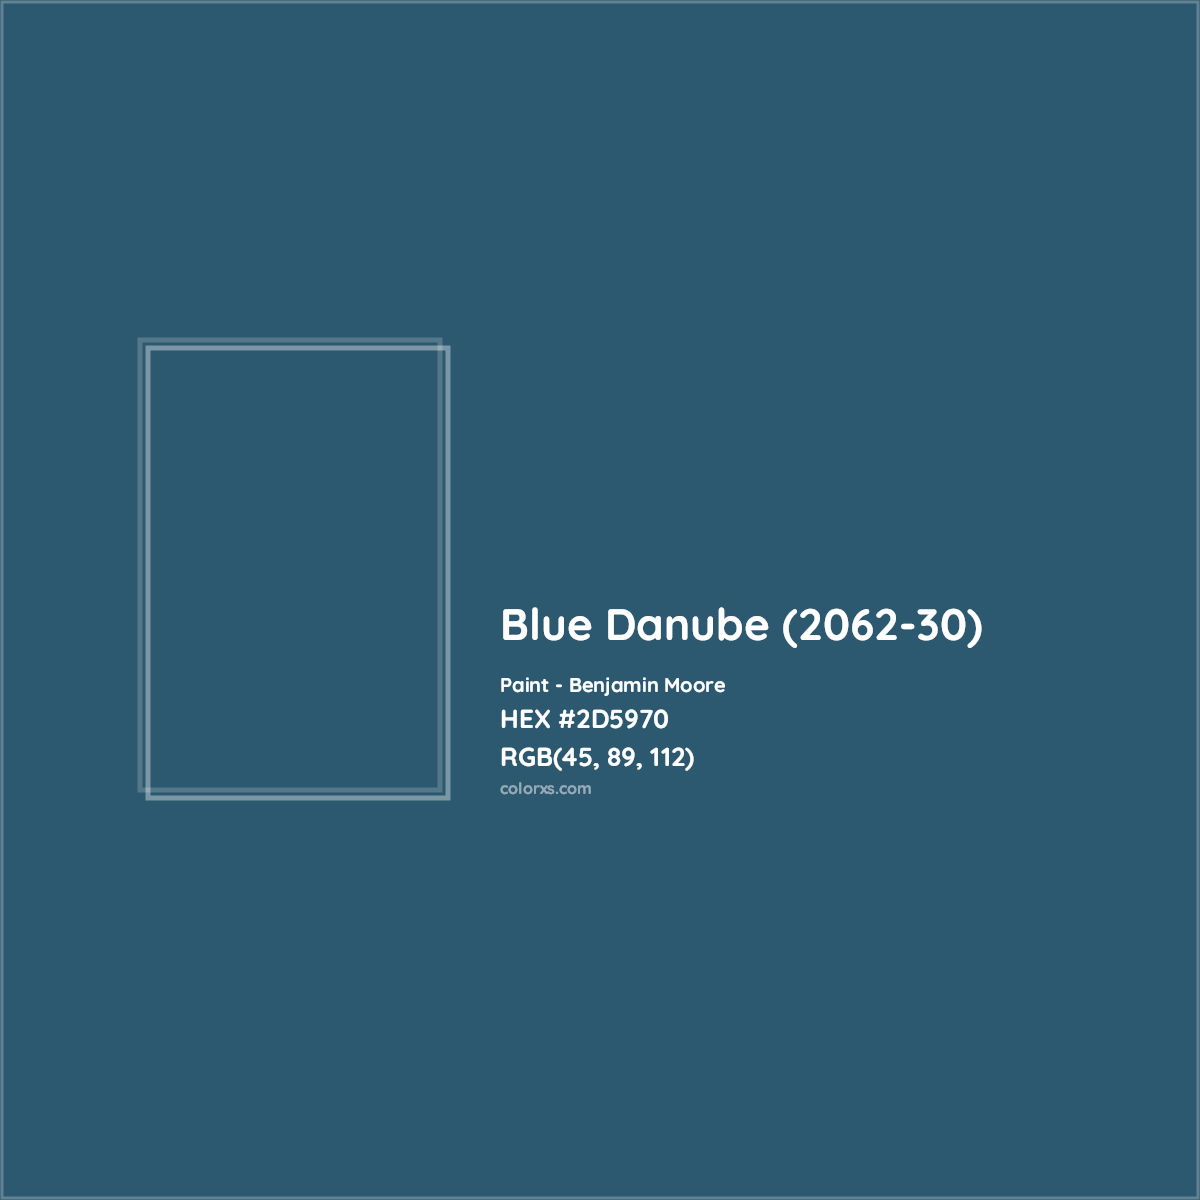 HEX #2D5970 Blue Danube (2062-30) Paint Benjamin Moore - Color Code